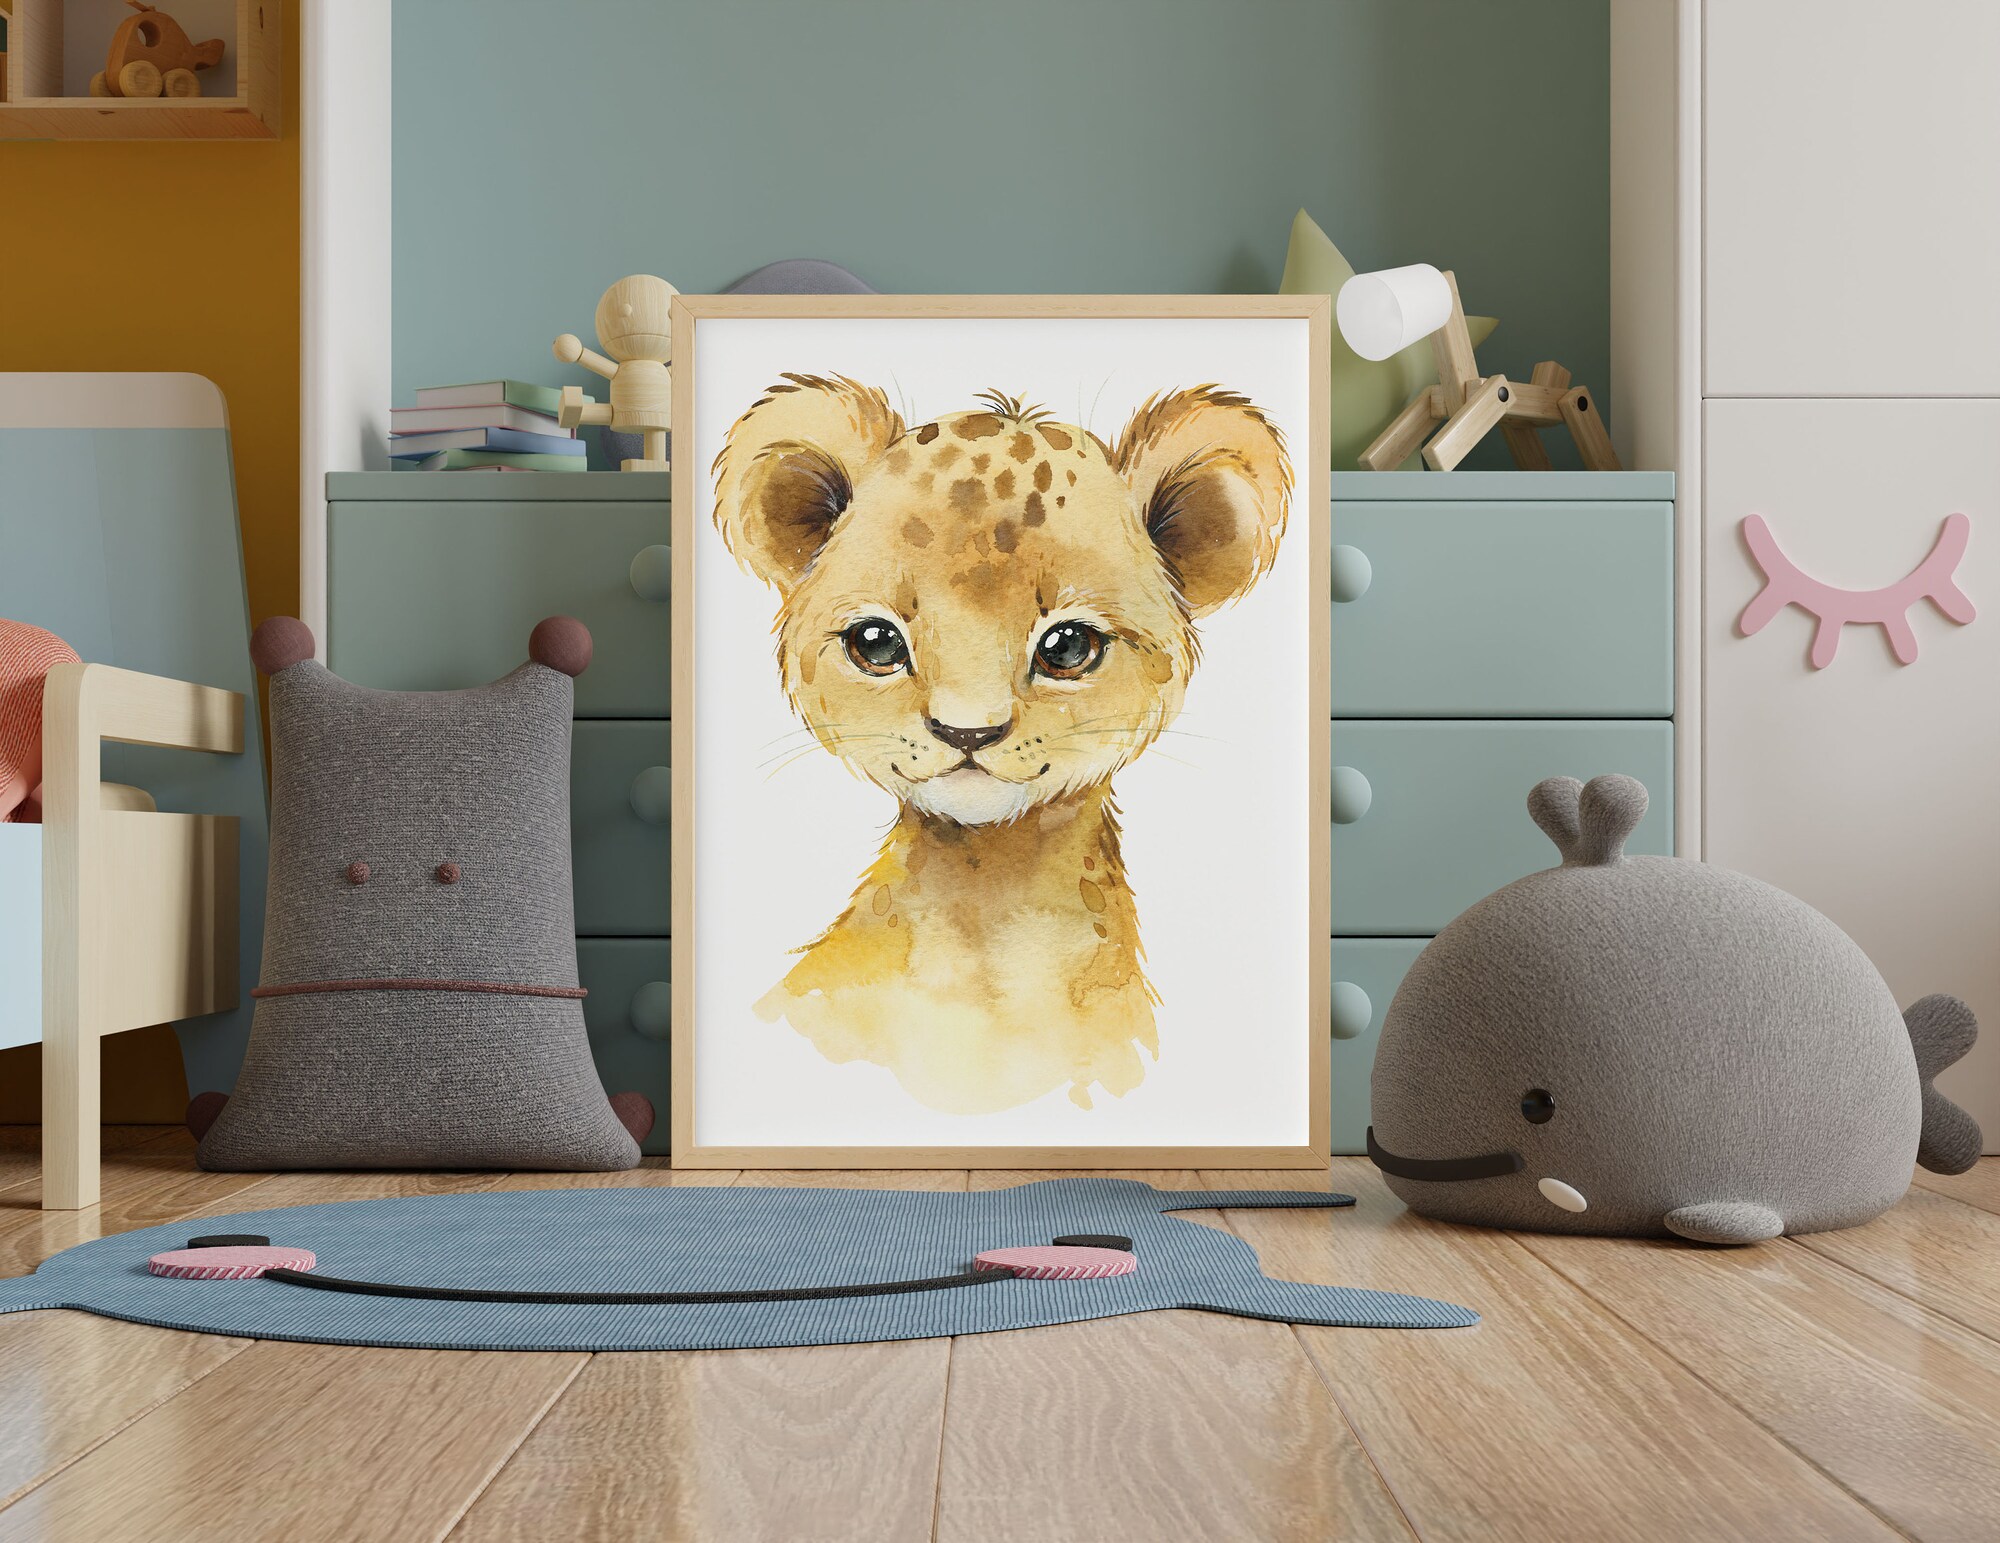 Lion SAFARI poster, forest nursery animals poster